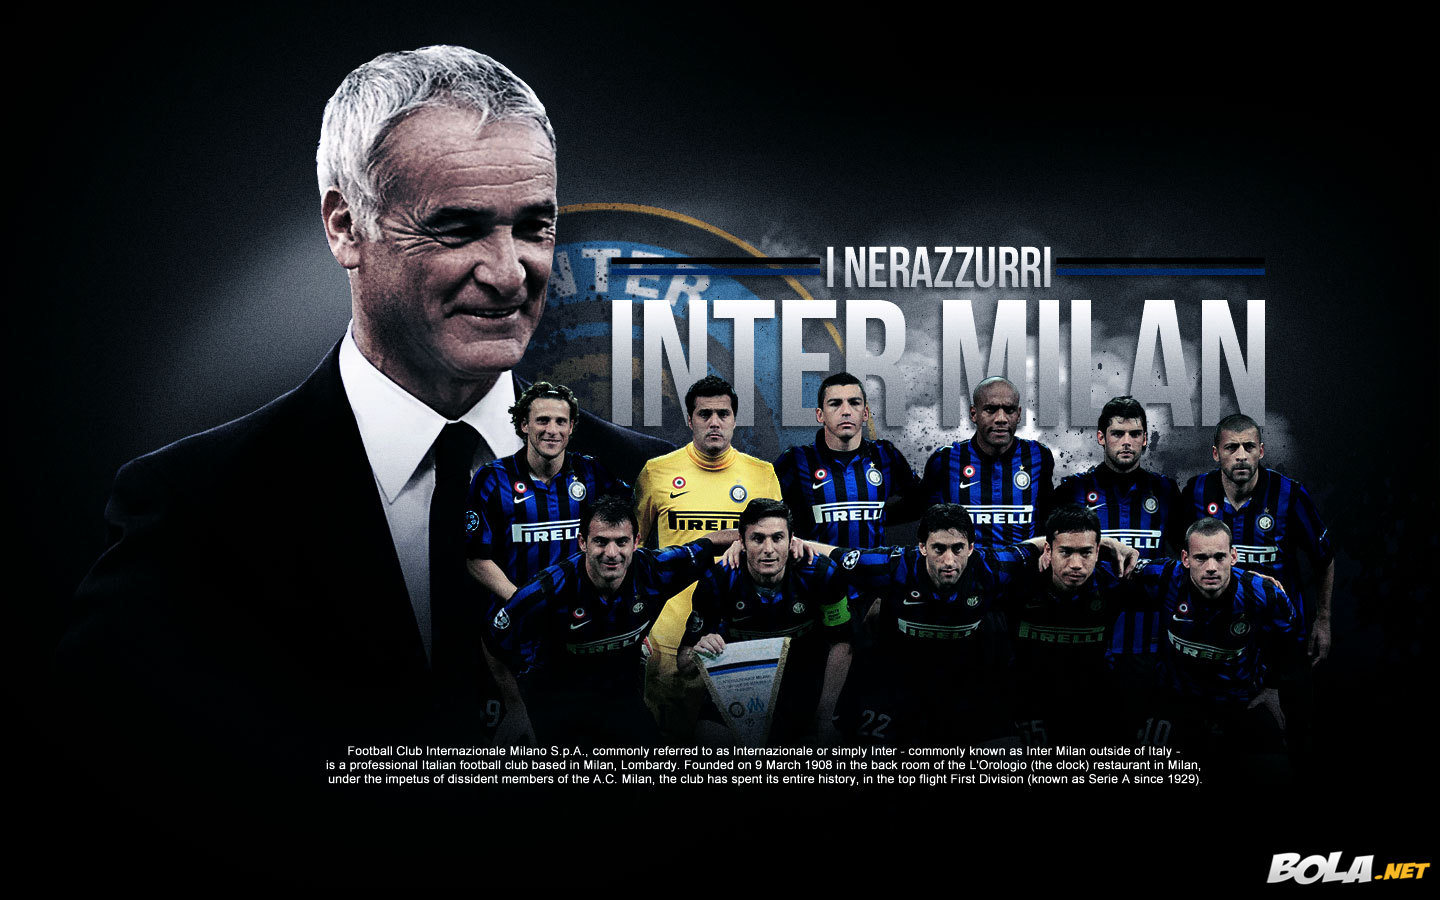 Deskripsi : Wallpaper Inter Milan, size: 1440x900